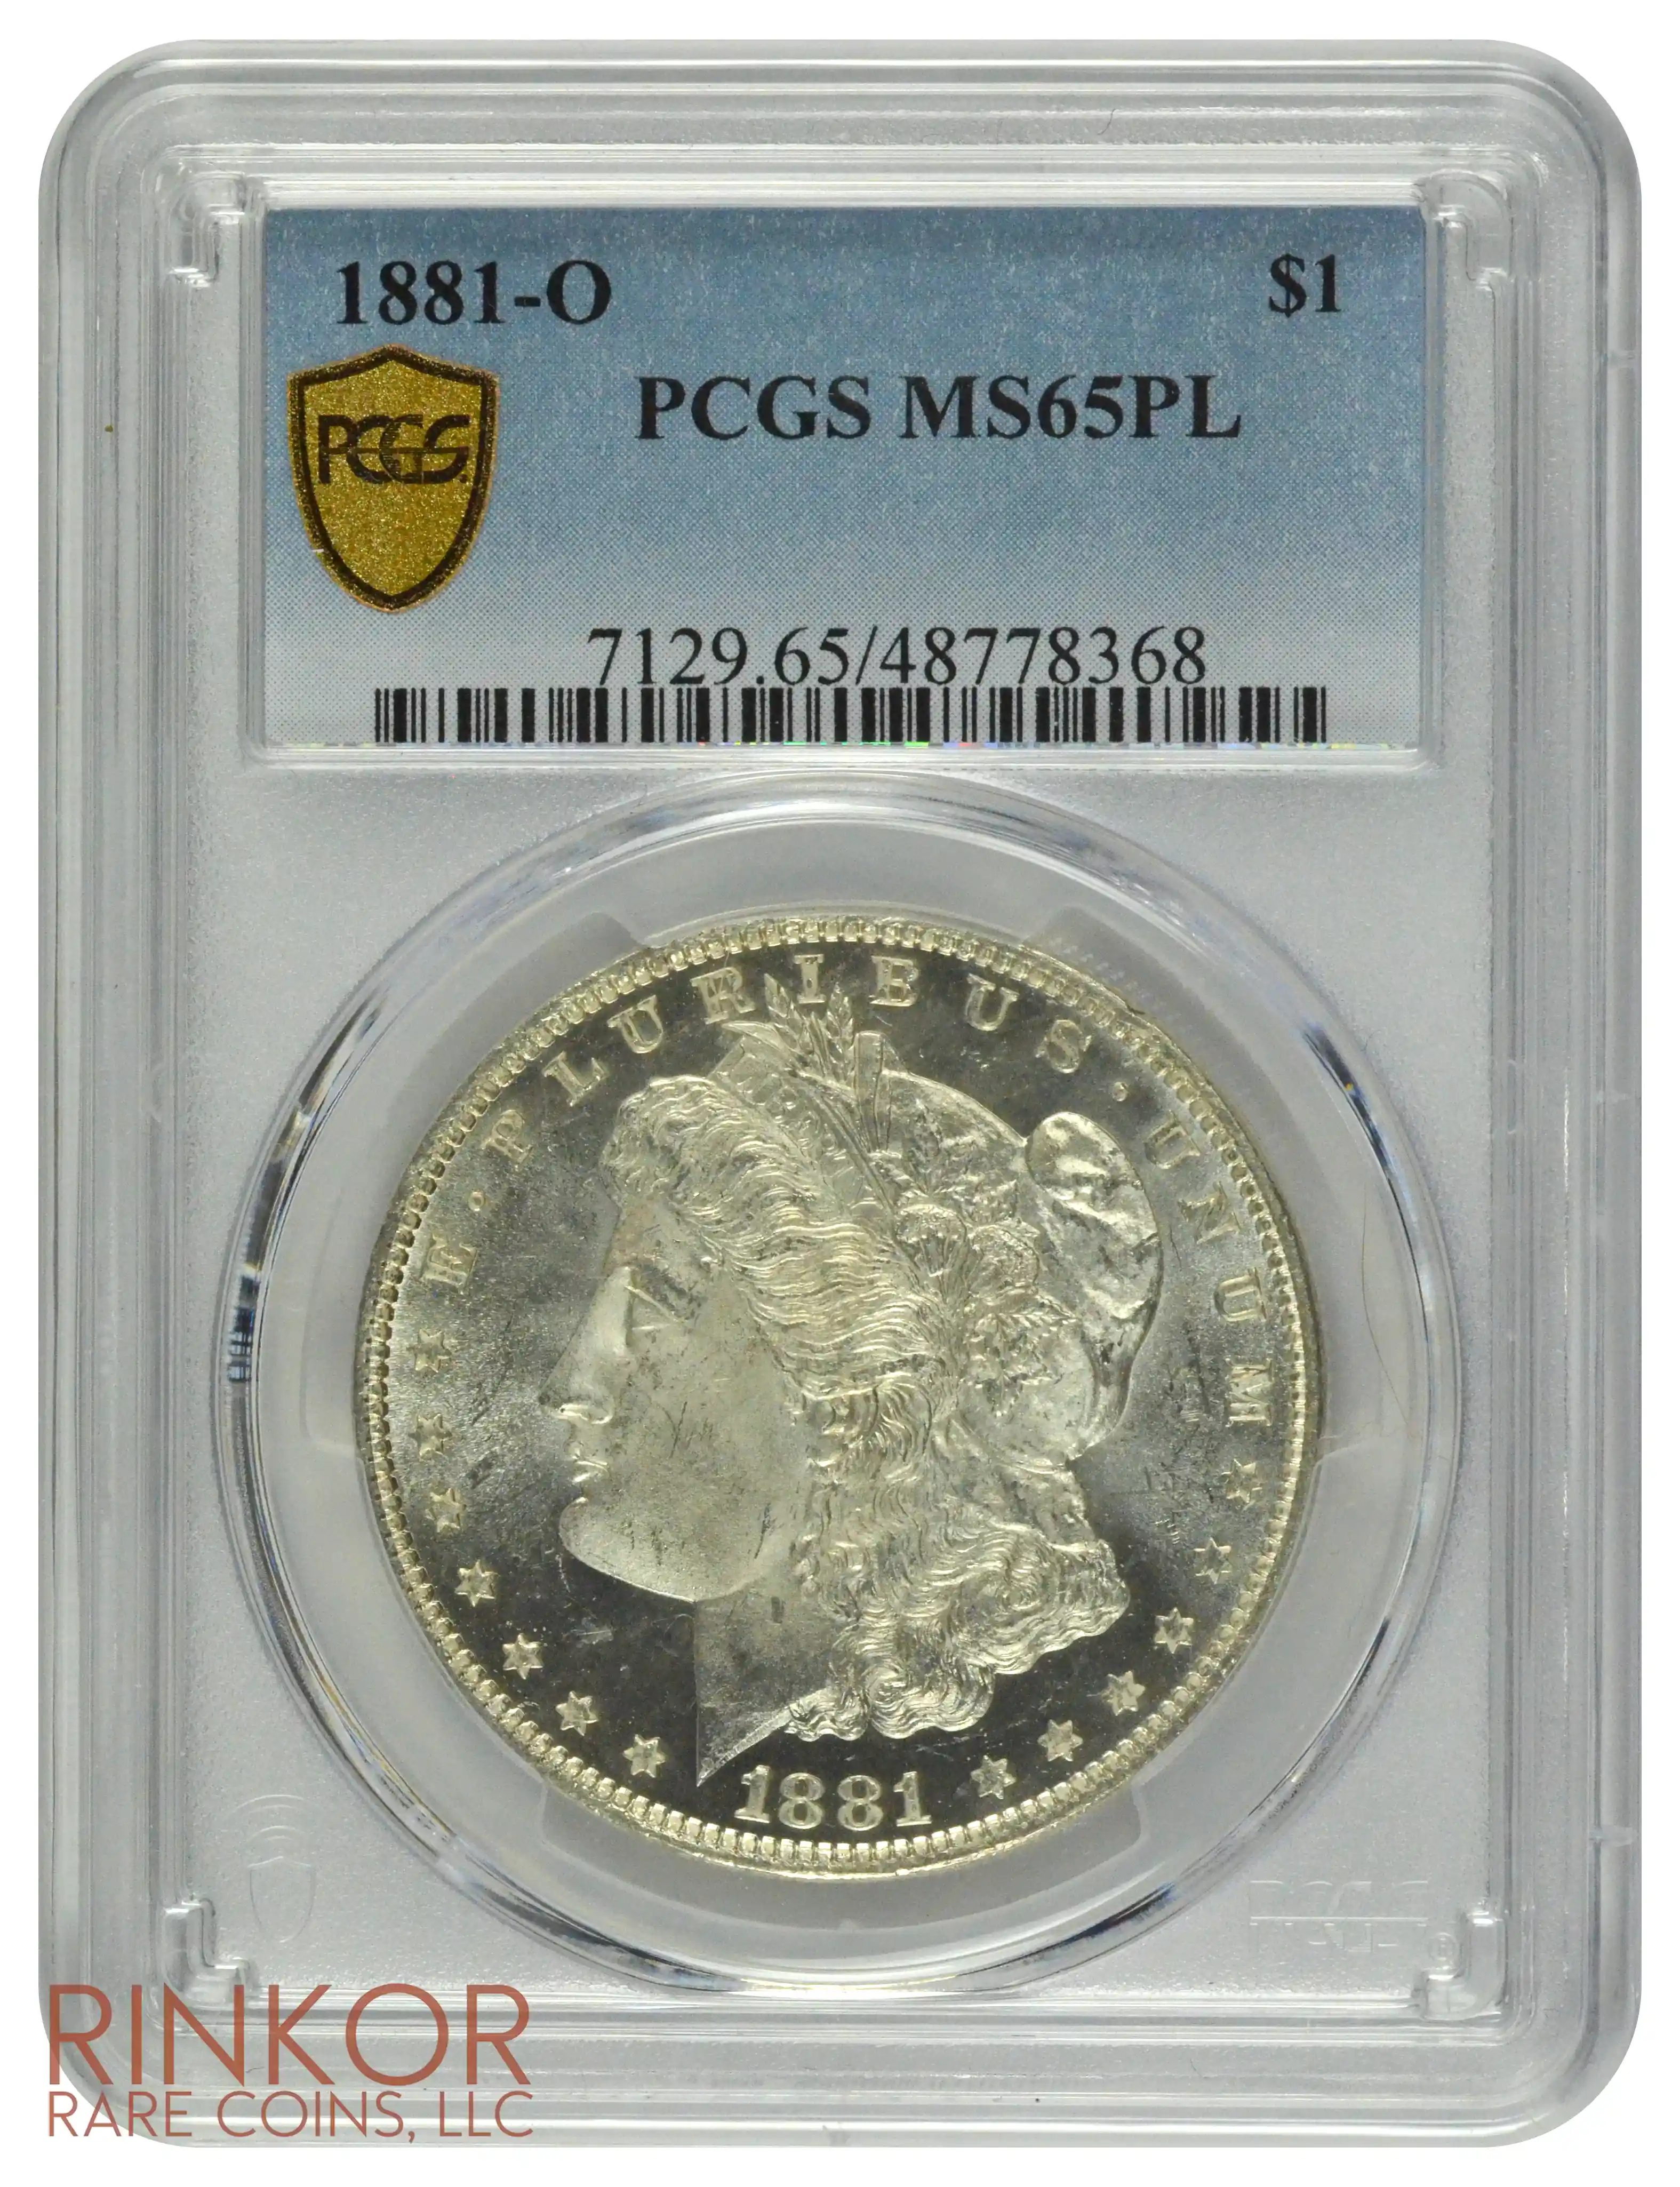 1881-O $1 PCGS MS 65 PL